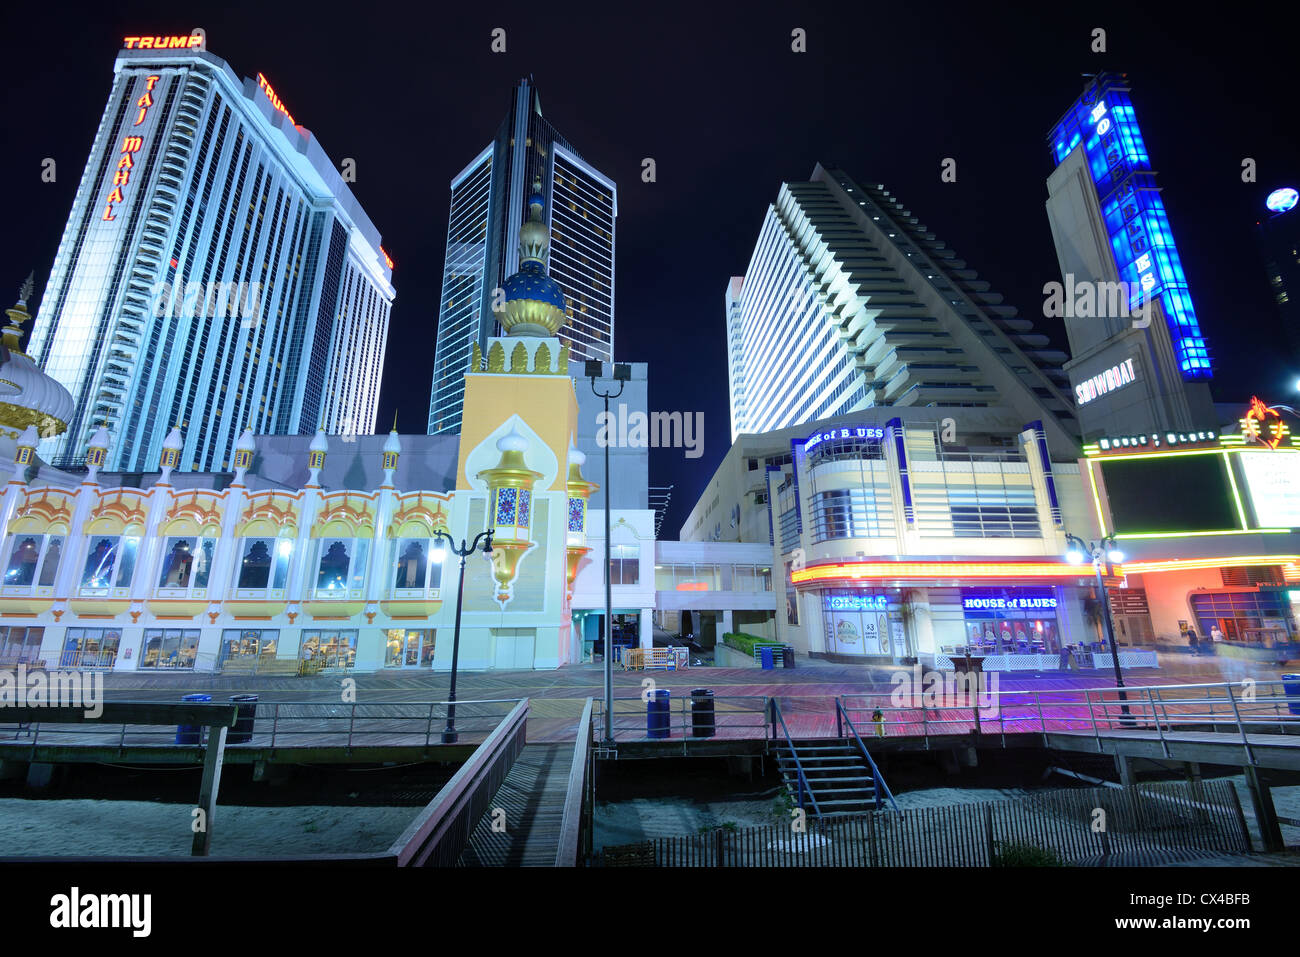 Promenade de nuit d'Atlantic City, New Jersey, USA. Banque D'Images